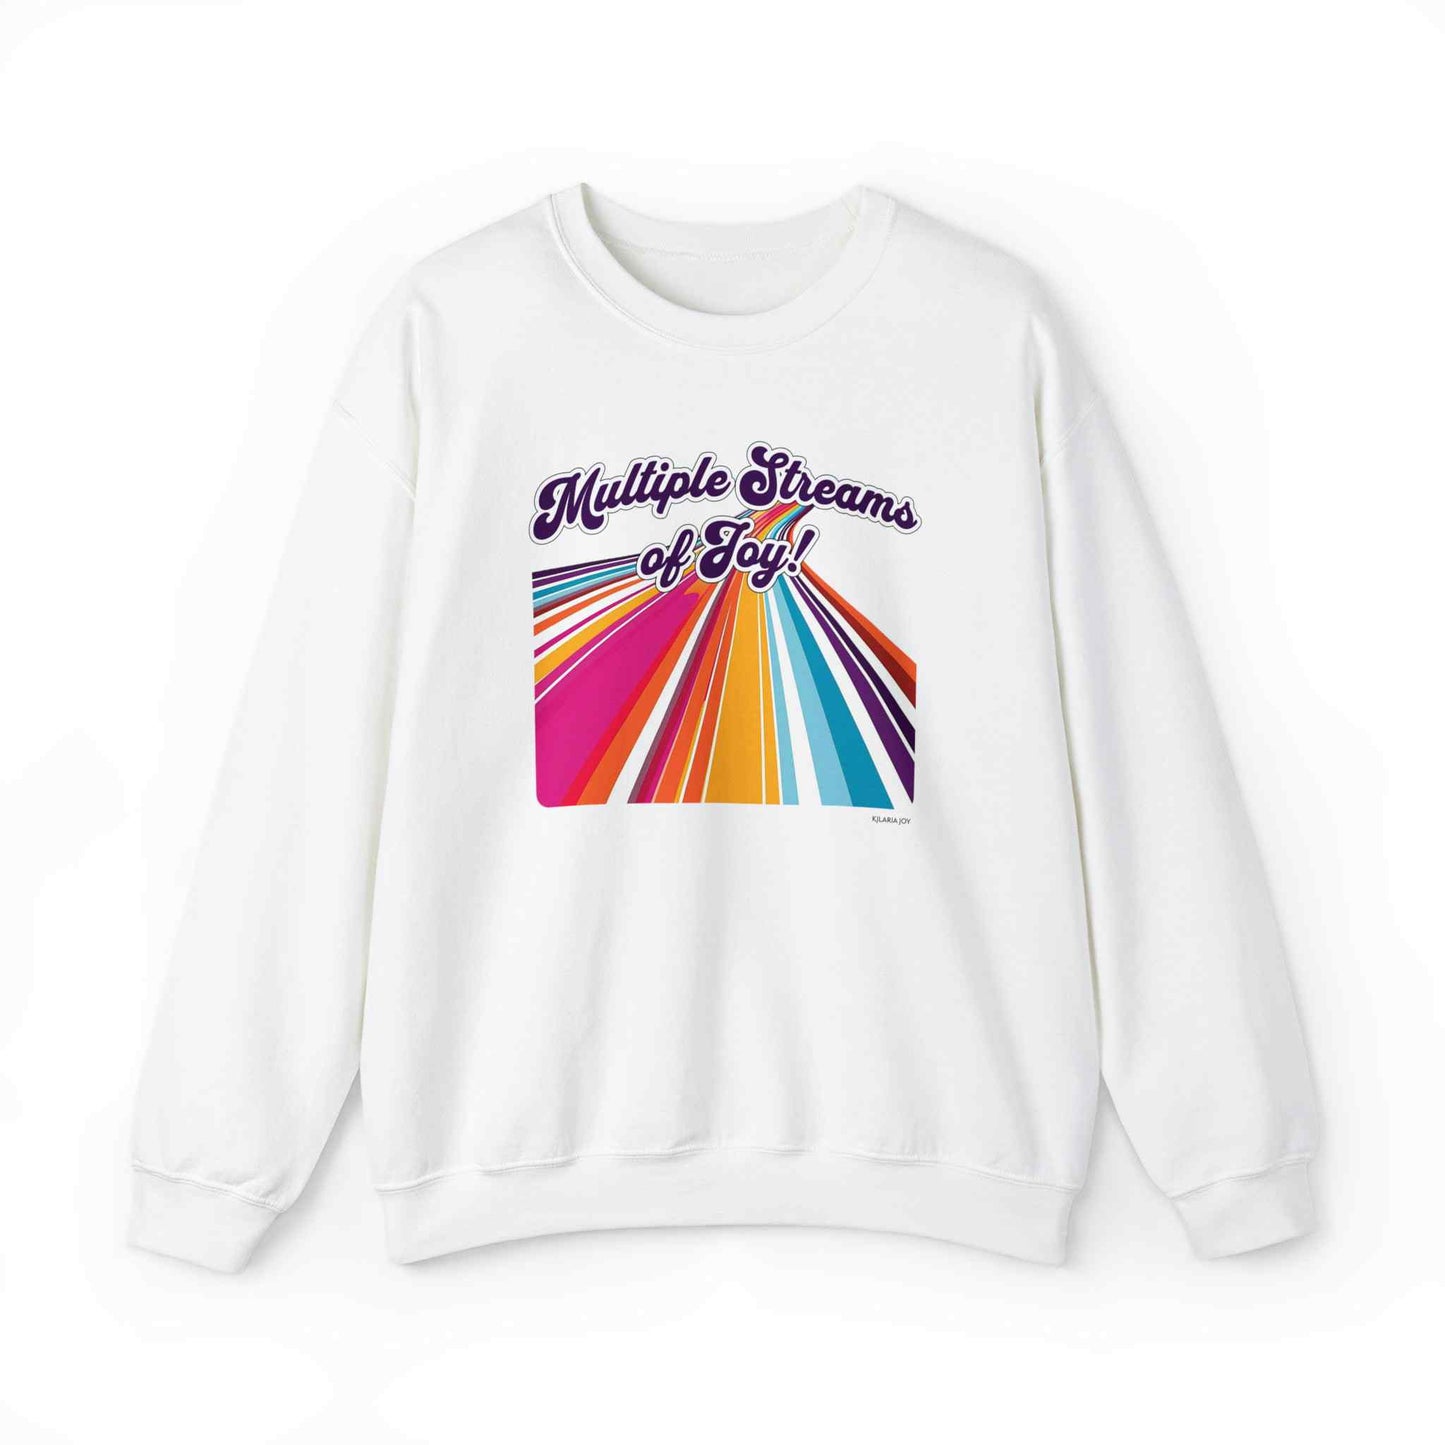 Multiple Streams of Joy Classic Fit Sweatshirt